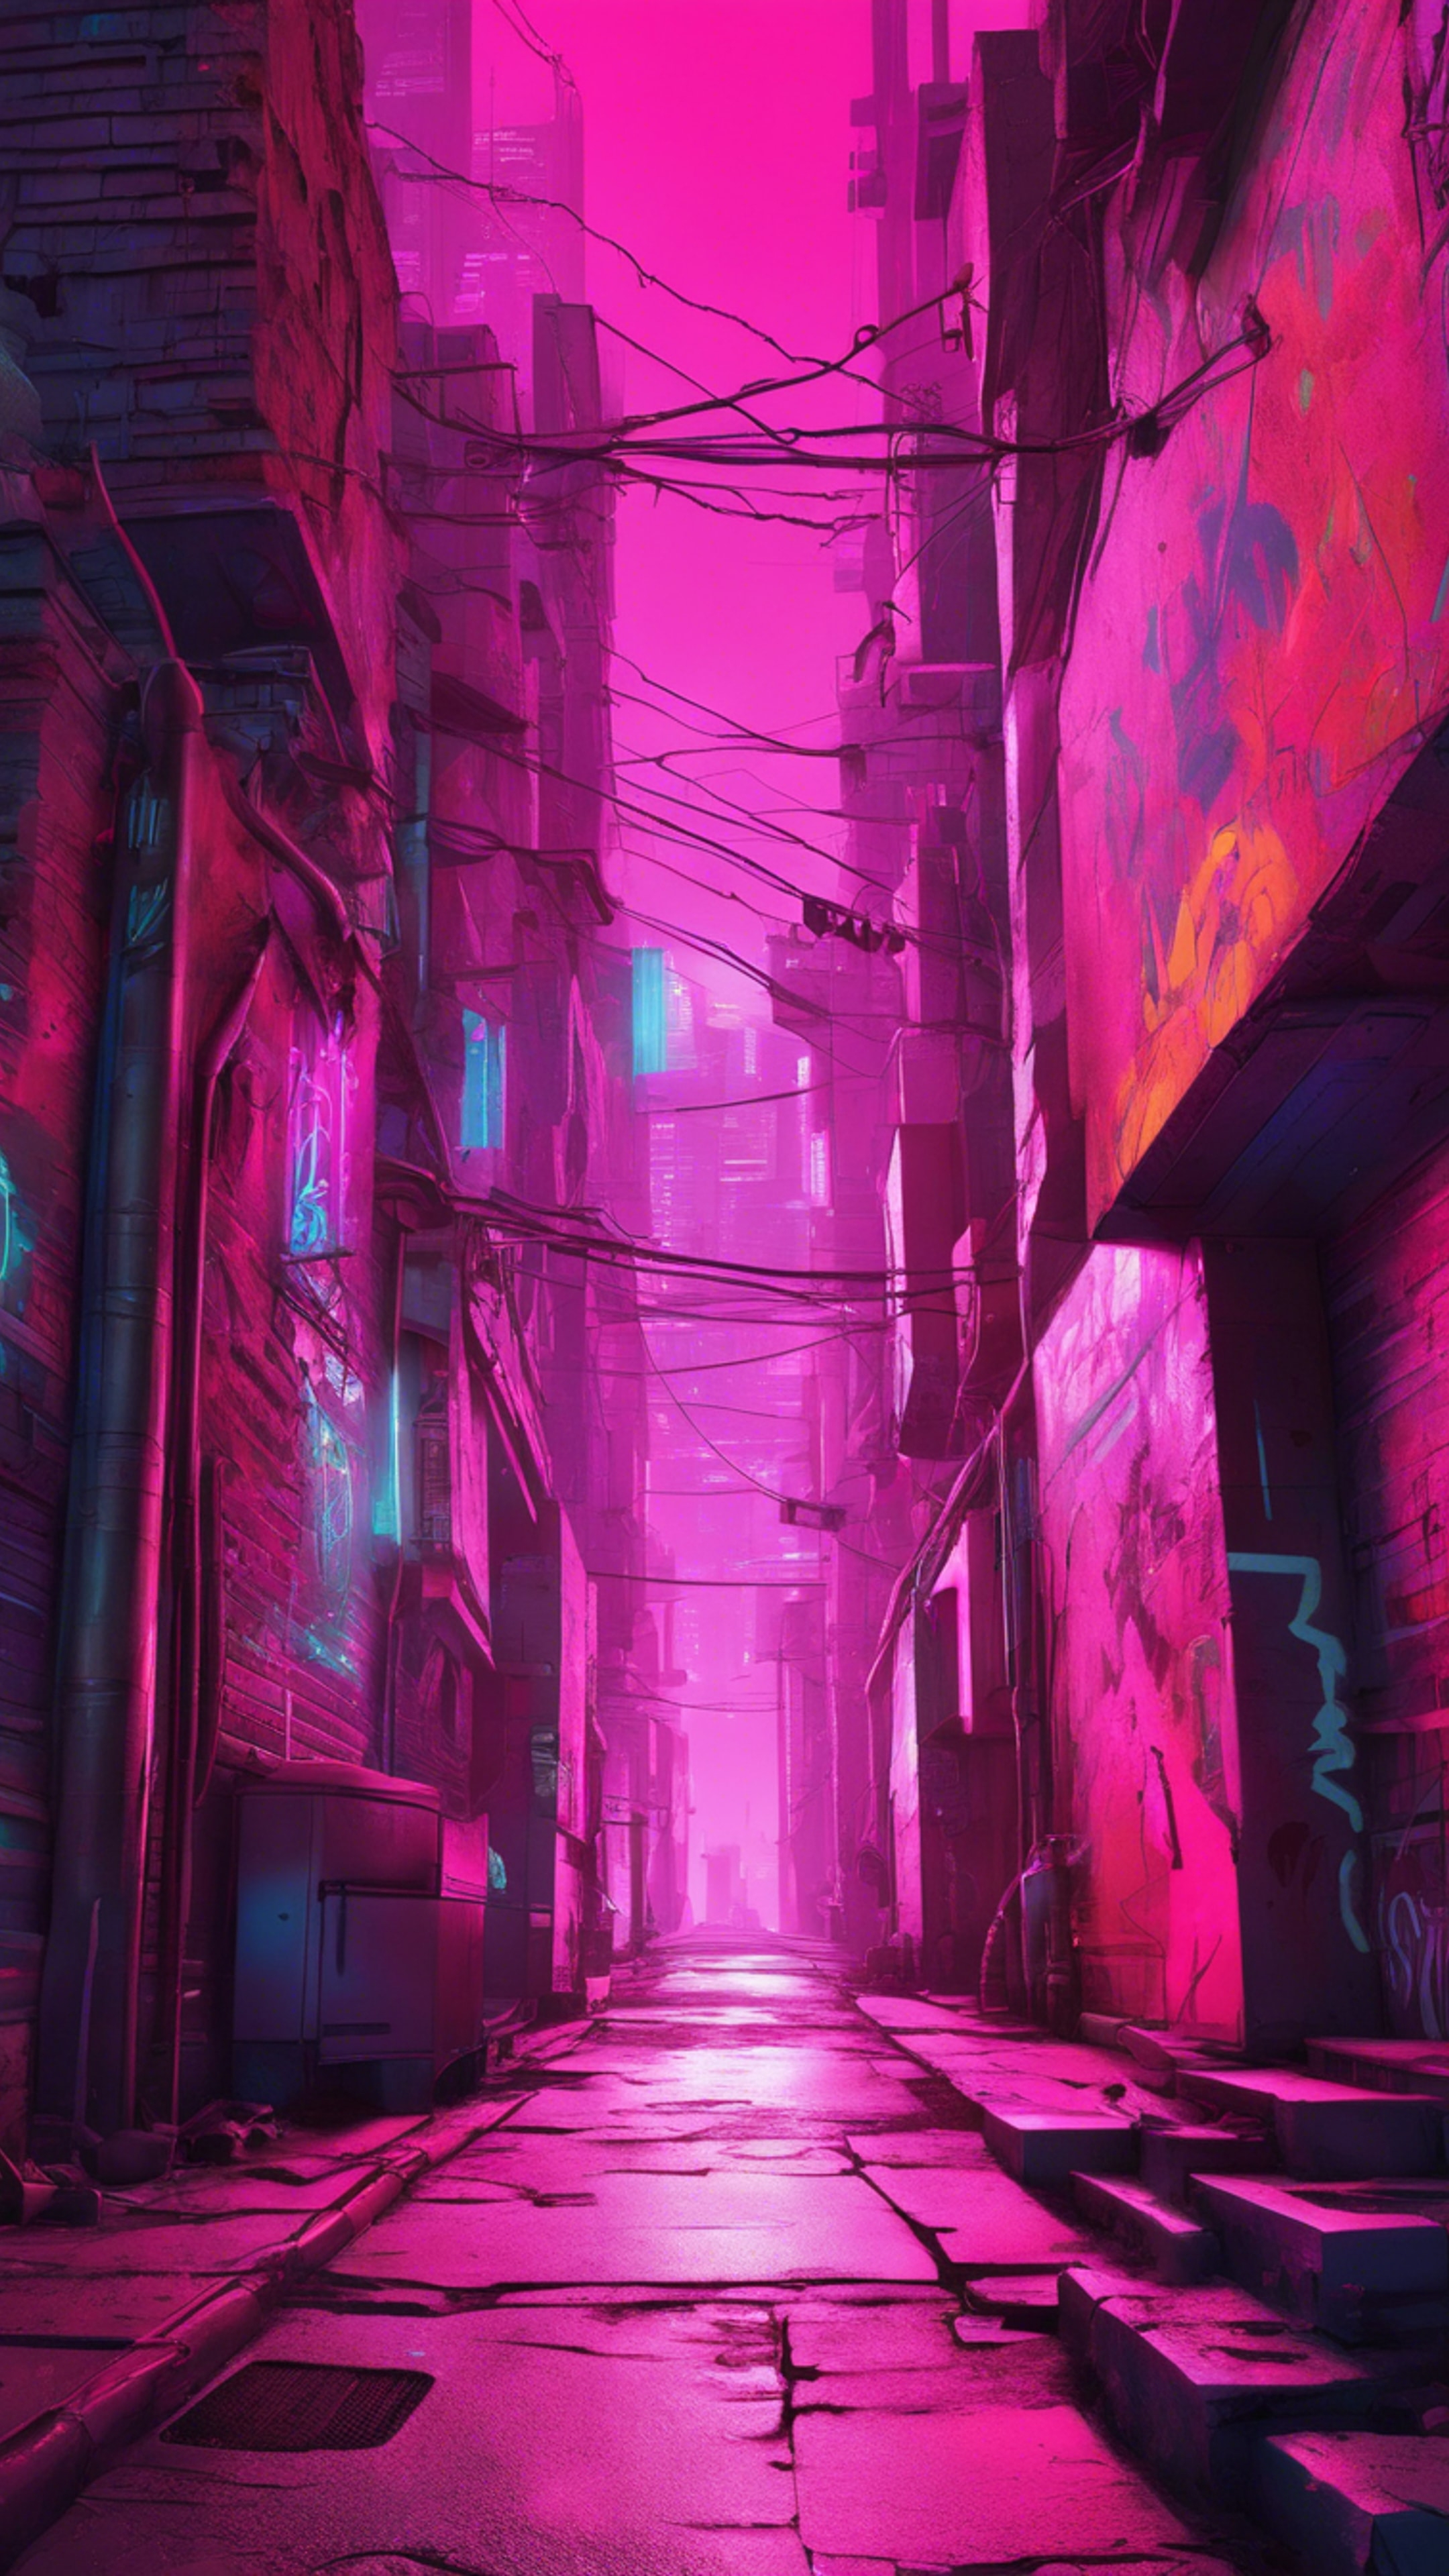 A neon-lit city alley at midnight, with bright pink graffiti on the walls, radiating a cyberpunk aura. Hintergrund[6a5b63b1eaec4ac98291]